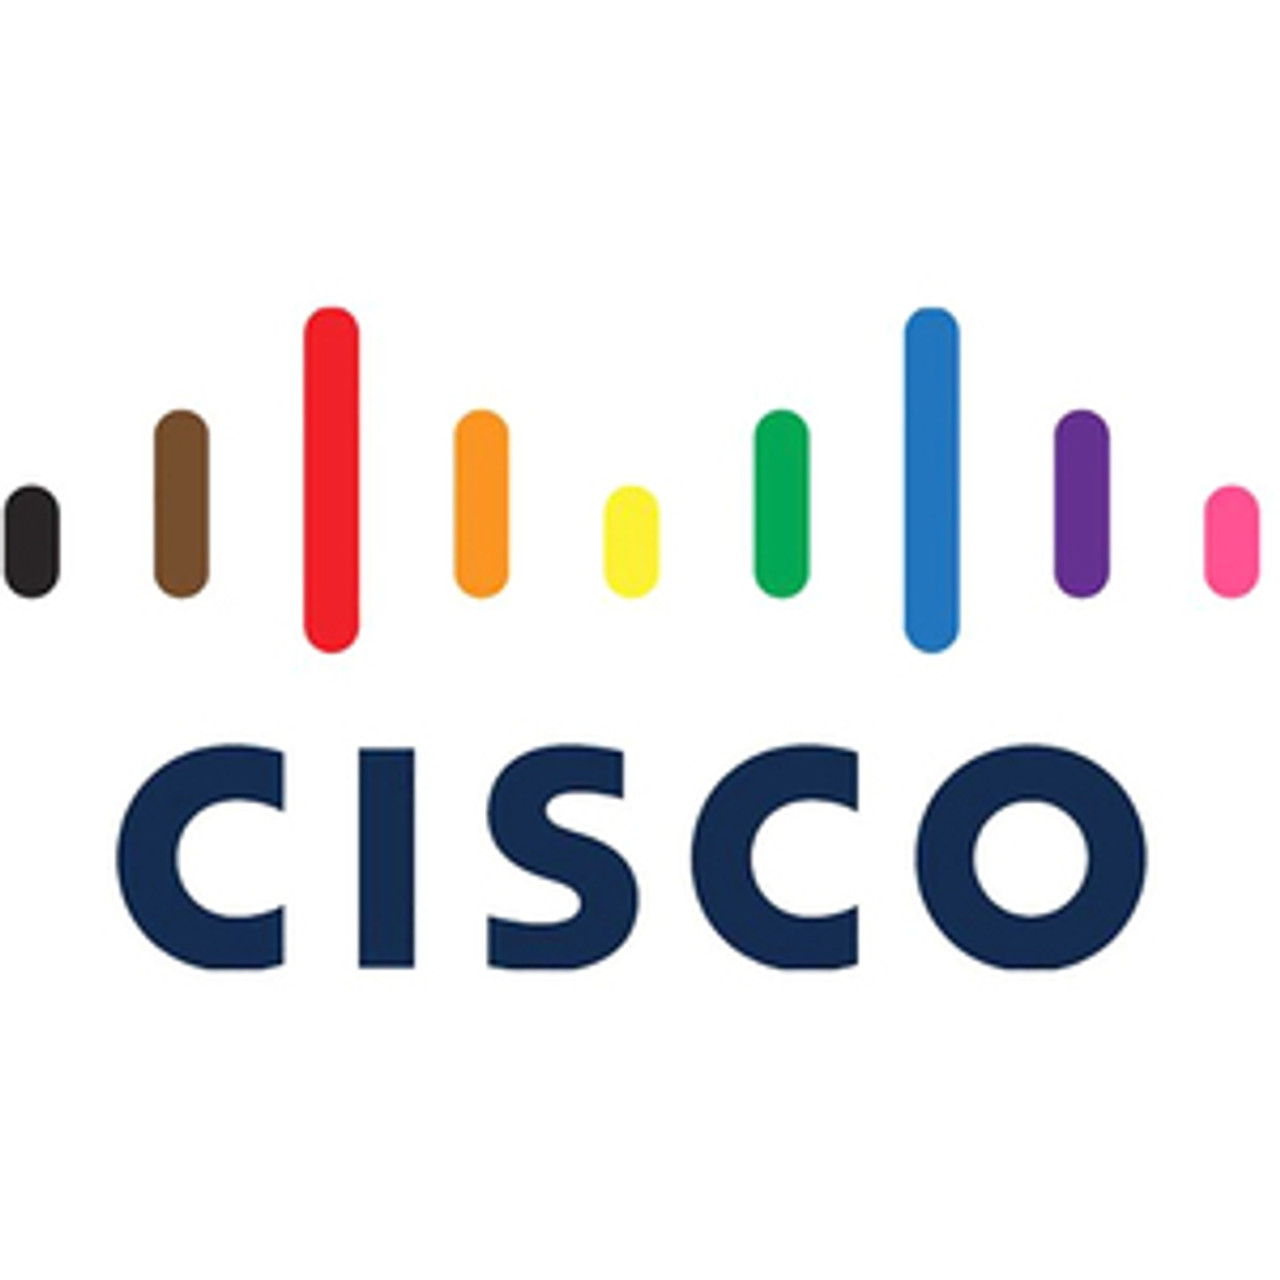 Cisco 1.20 TB Hard Drive - Internal - SAS (12Gb/s SAS)